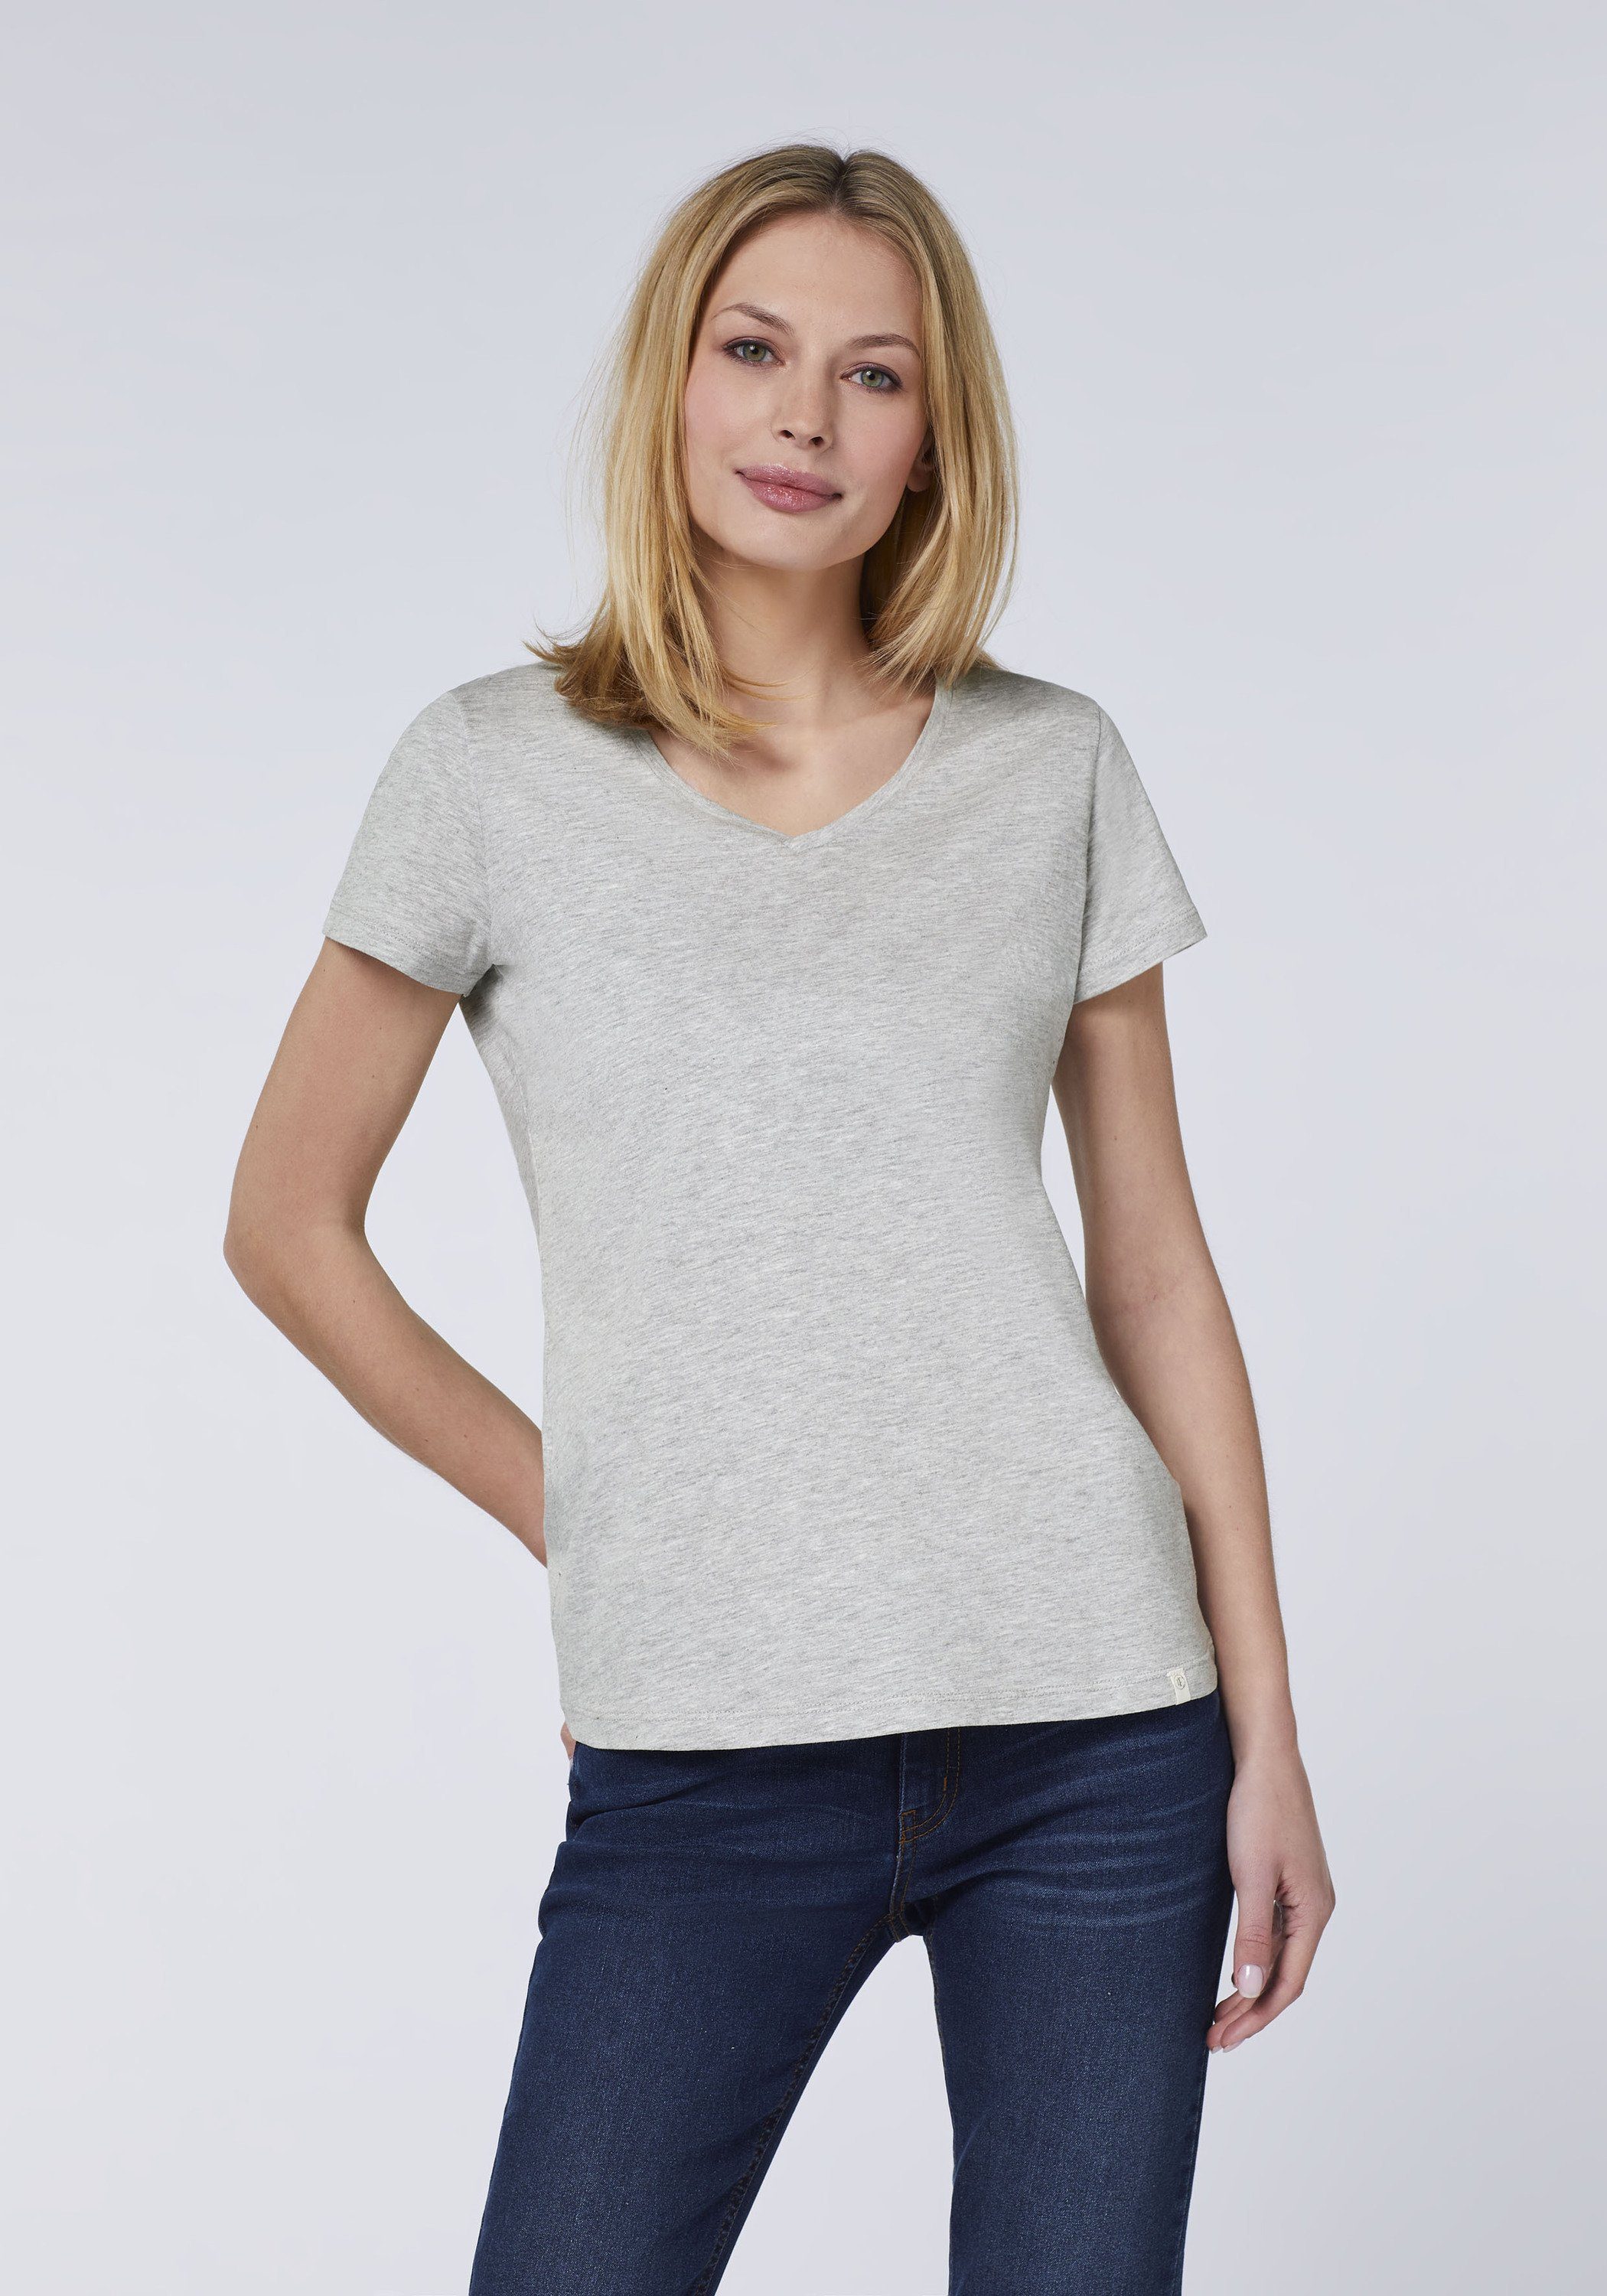 Detto Fatto T-Shirt Light V-Neck-Design 72 im femininen Grey